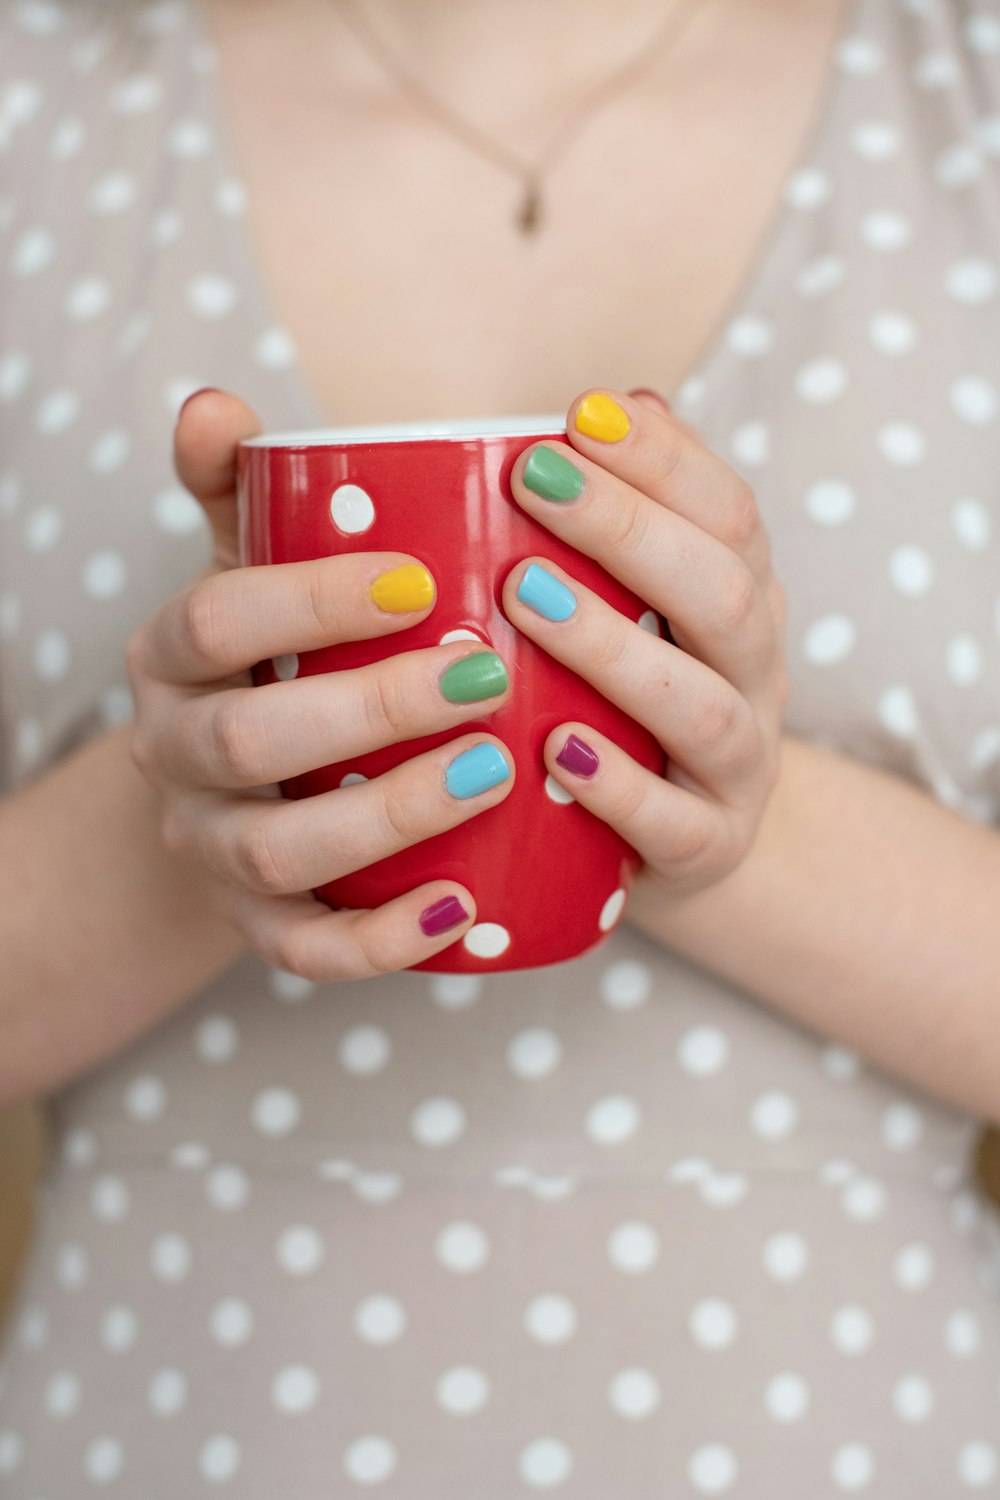 person holding red and white polka dot ceramic mug